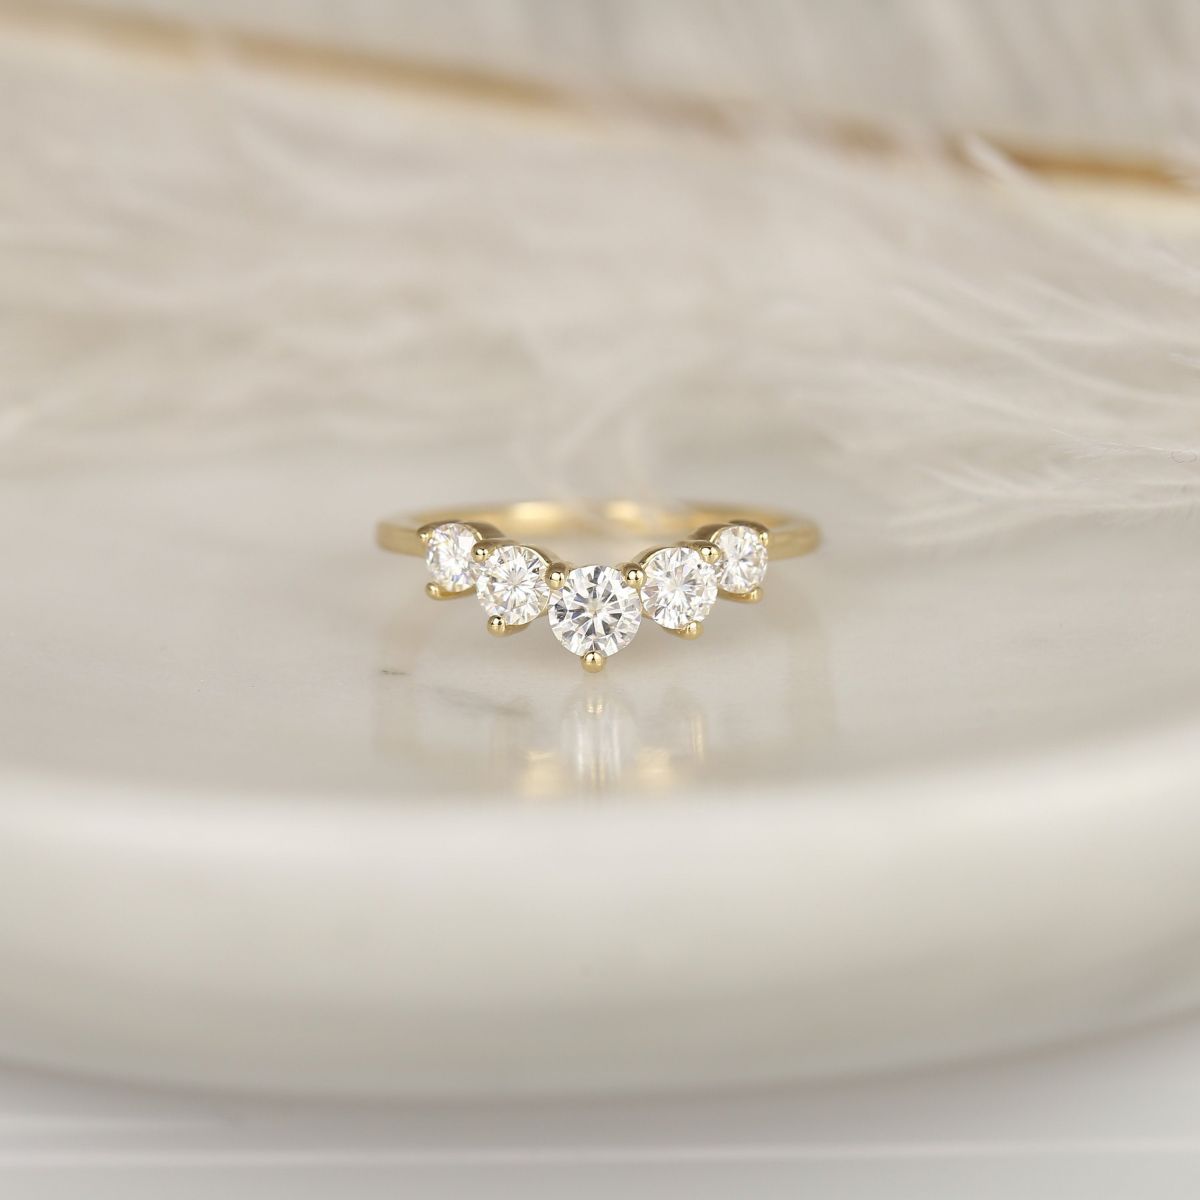 Glen 14kt Gold Diamonds Graduated Tiara Crown Curved Nesting Ring Rosados Box